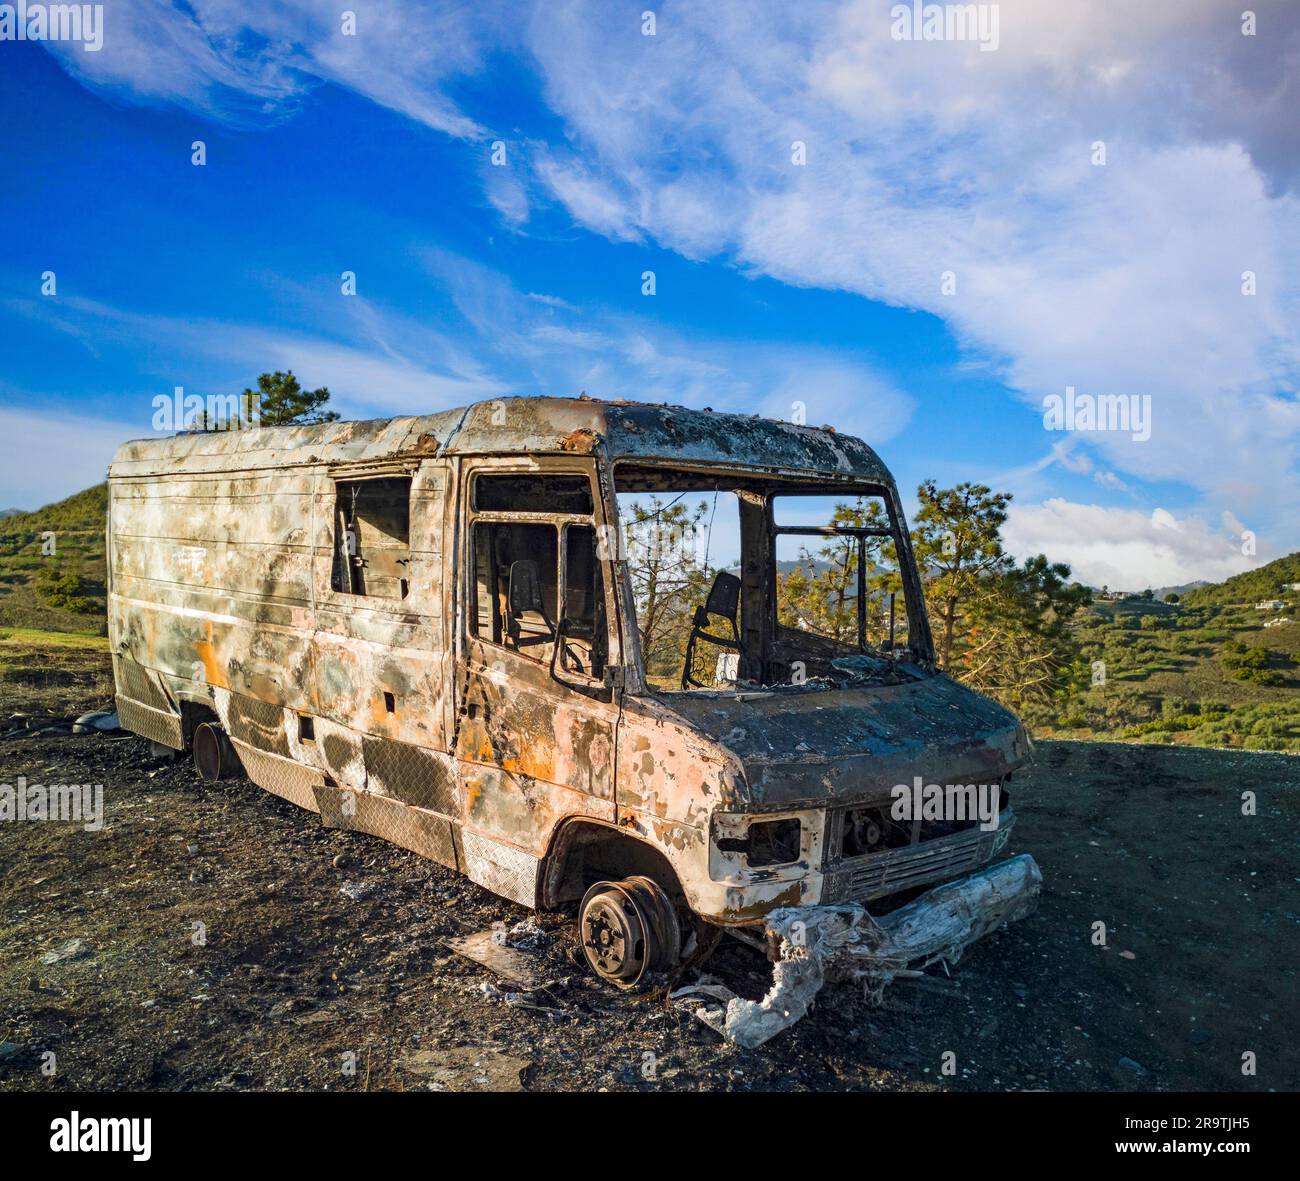 Remains of burnt van left in nature Stock Photo